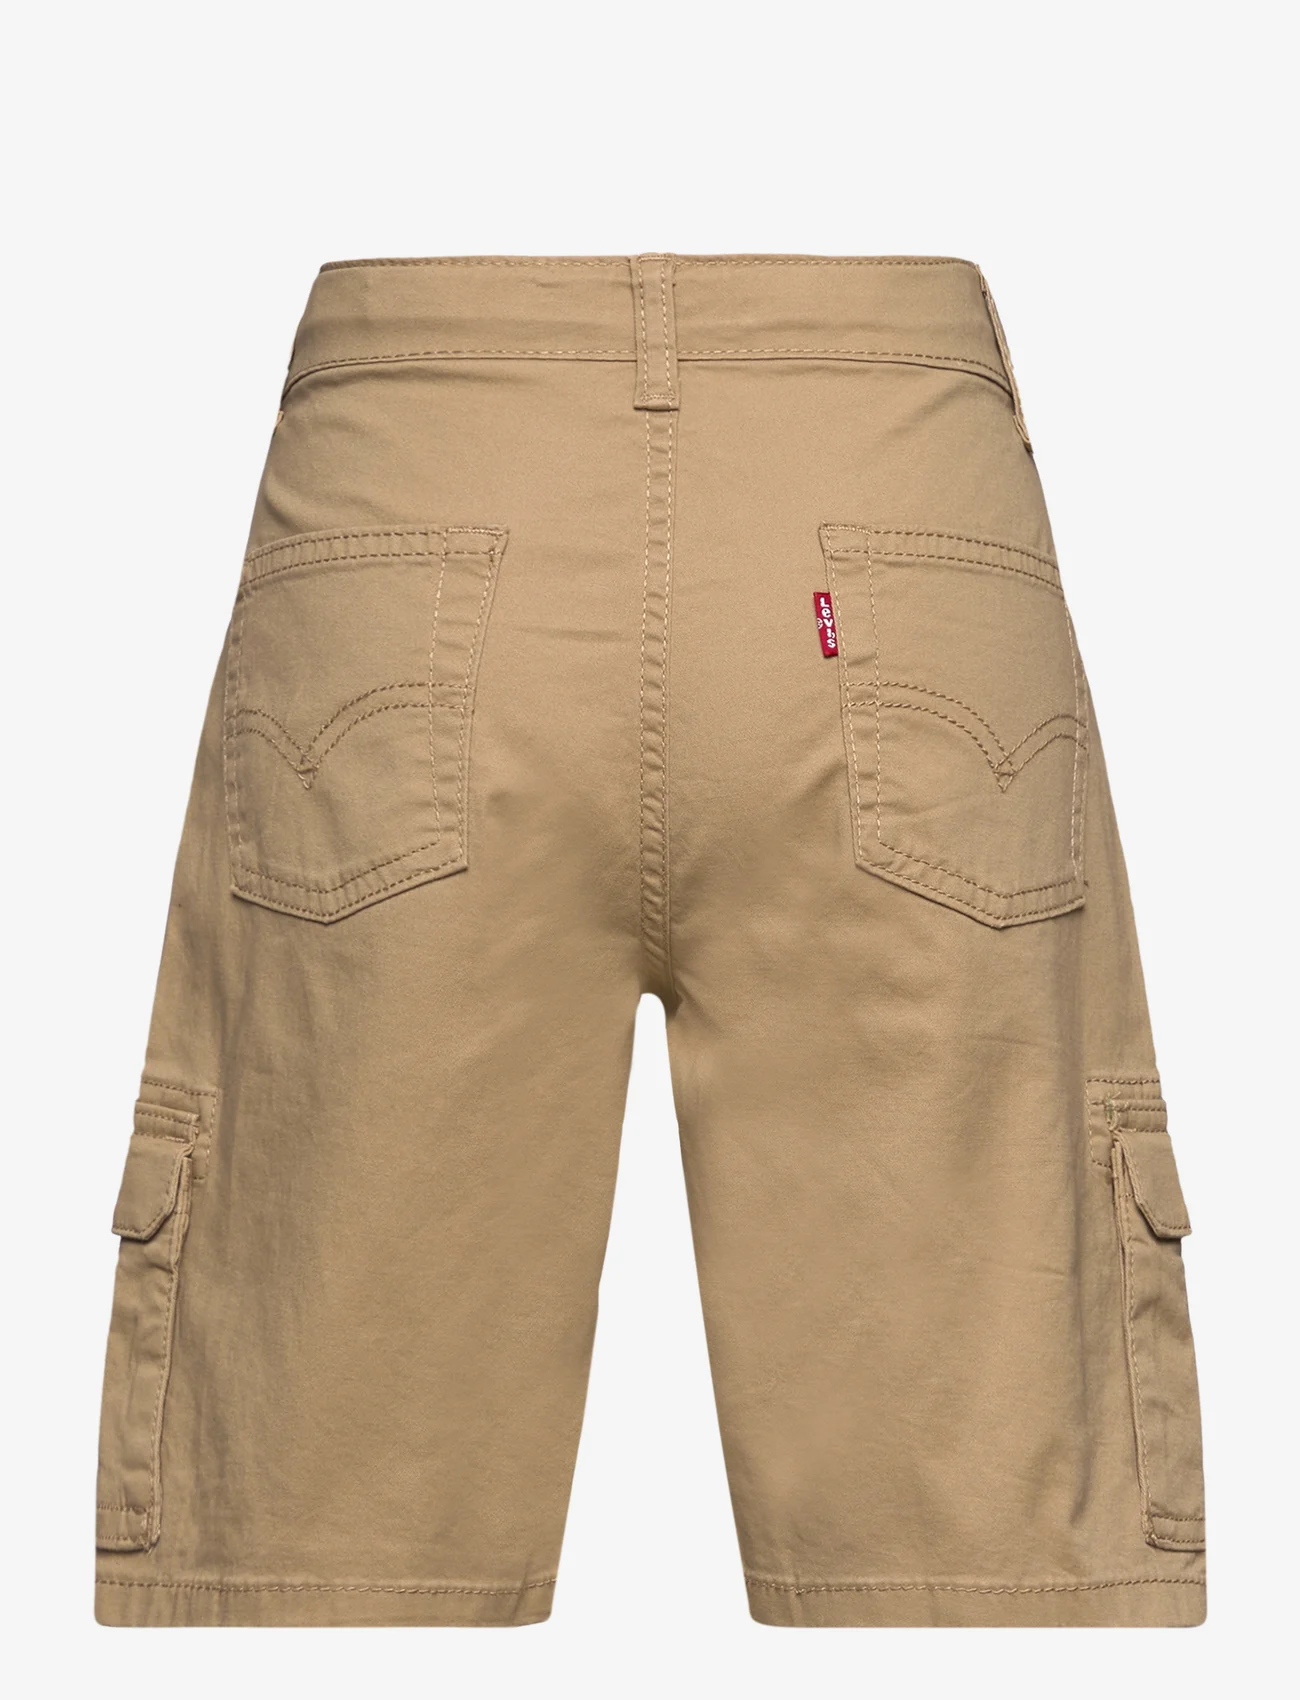 Levi's - Levi's® Standard Cargo Shorts - lühikesed dressipüksid - yellow - 1